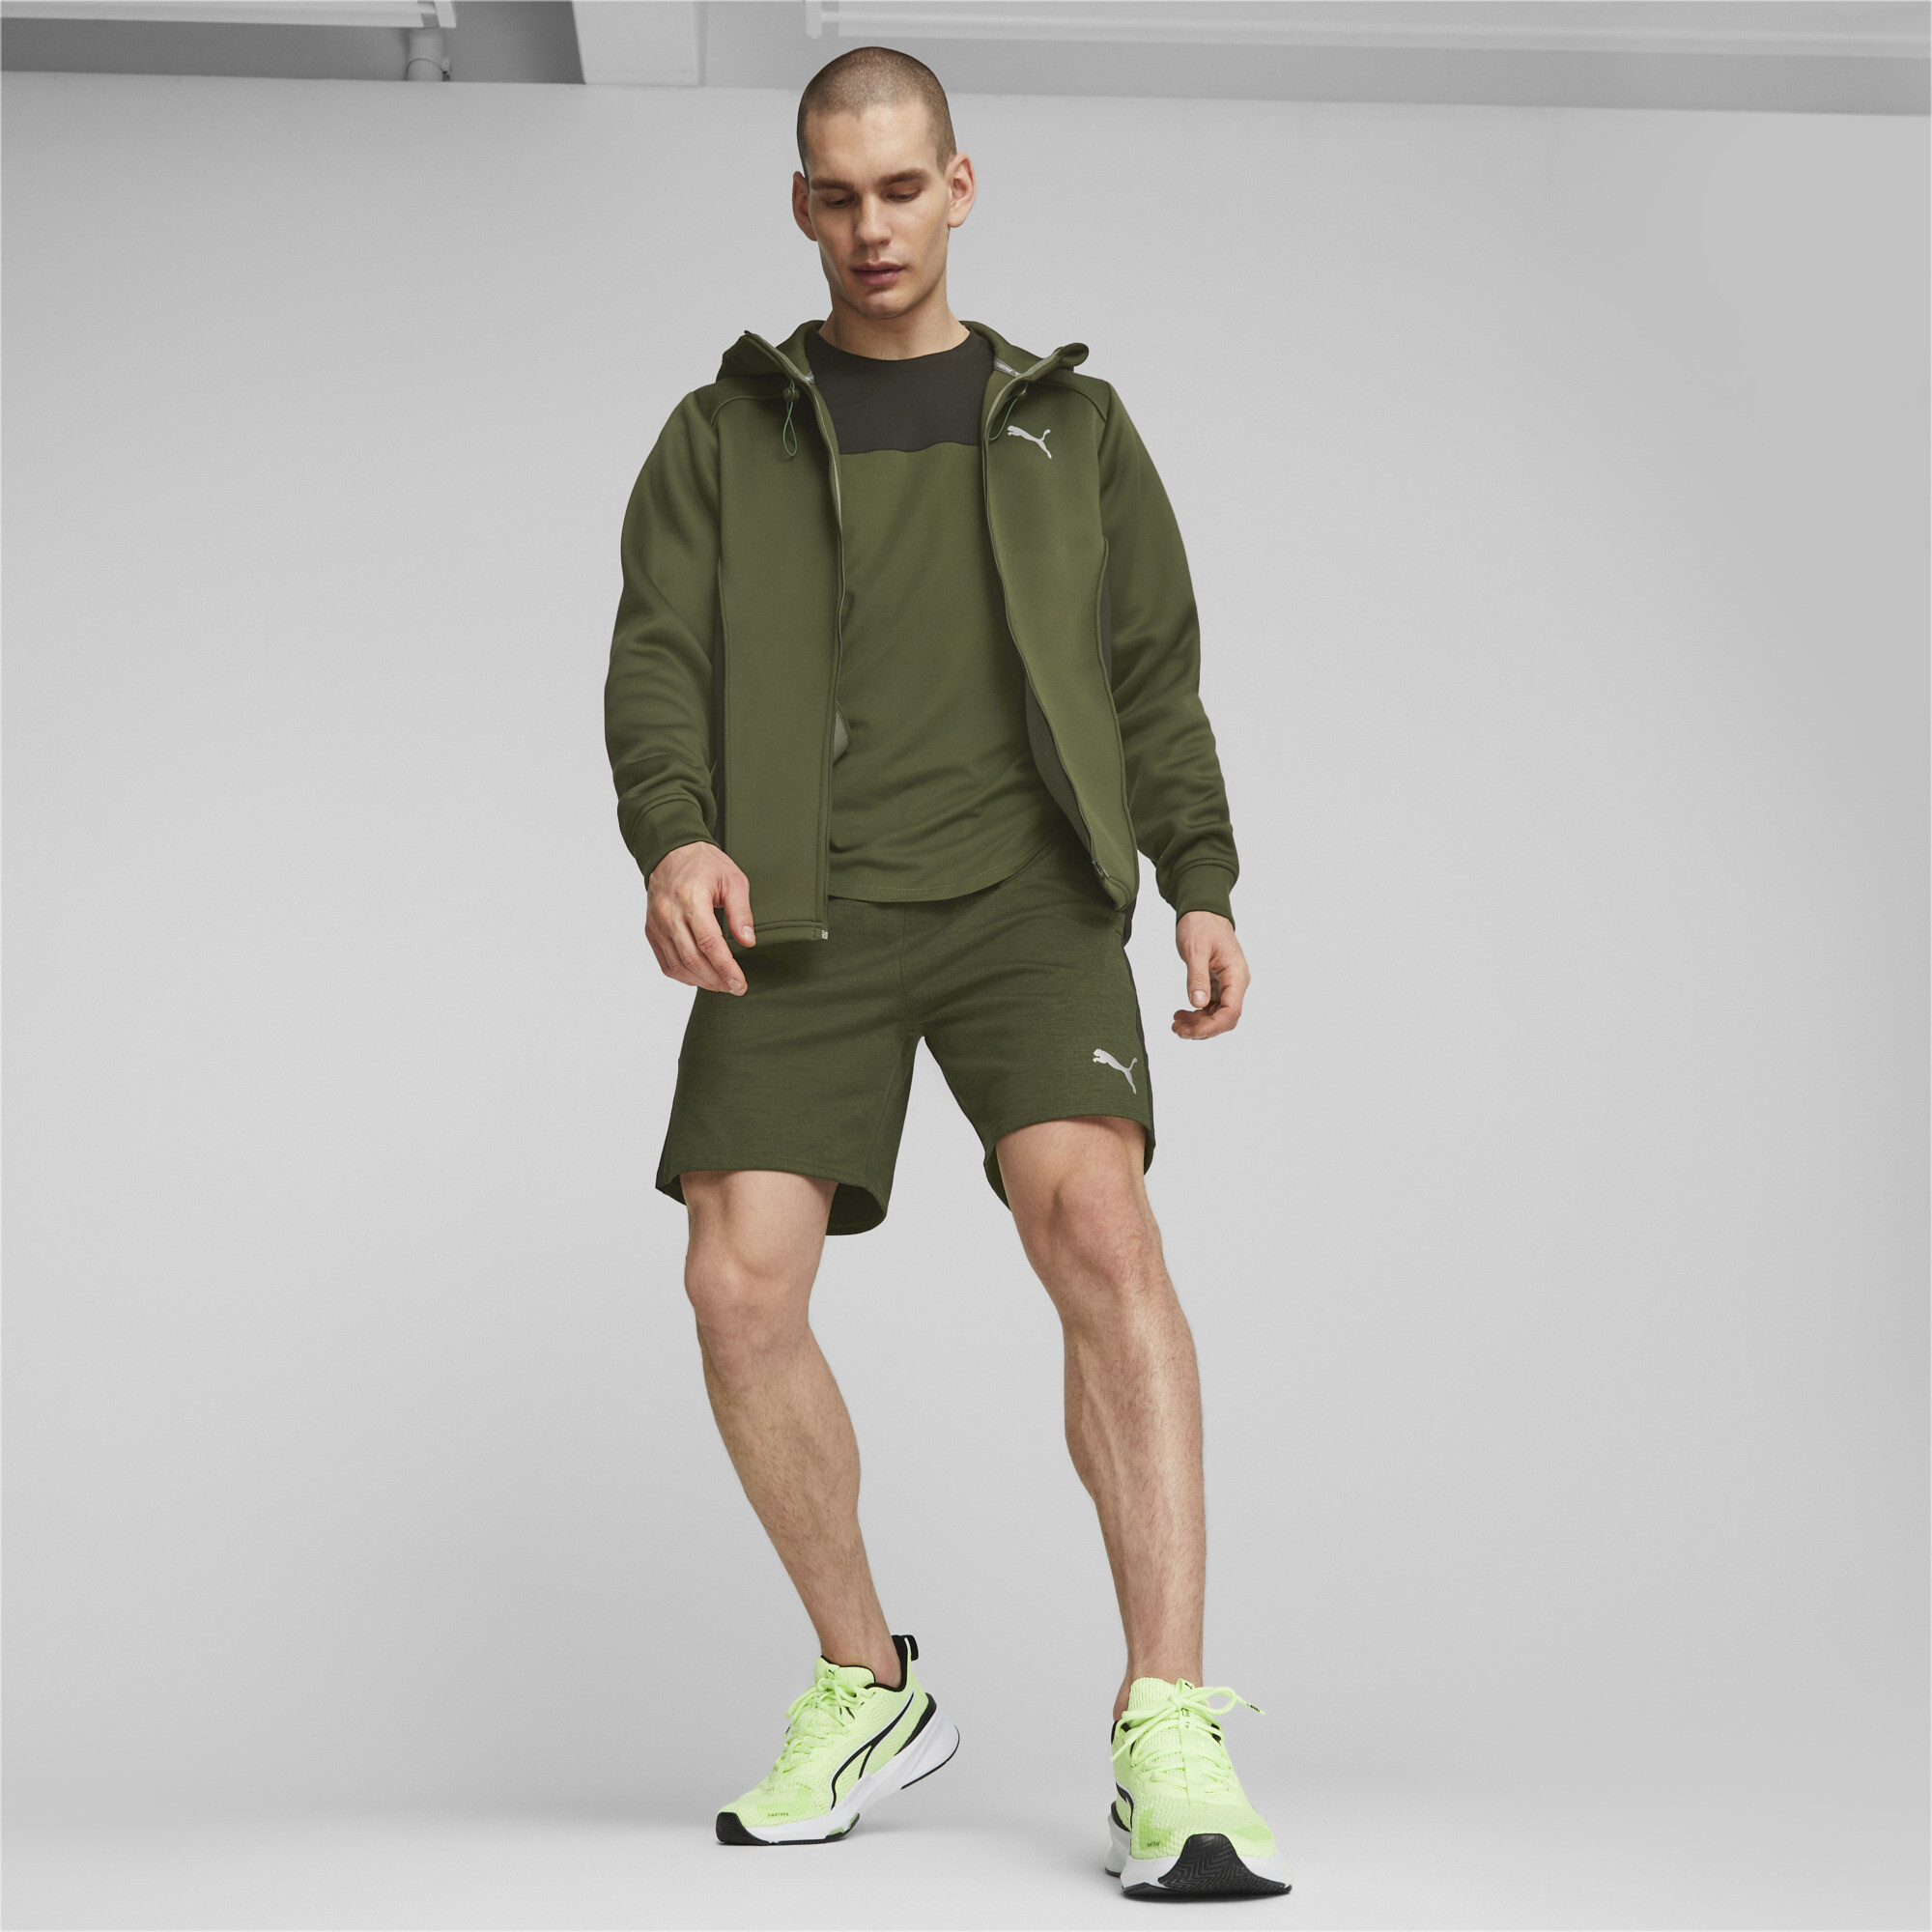 Men's Puma CLOUDSPUN TECHLBL Full-zip's Jacket, Green, Size S, Clothing